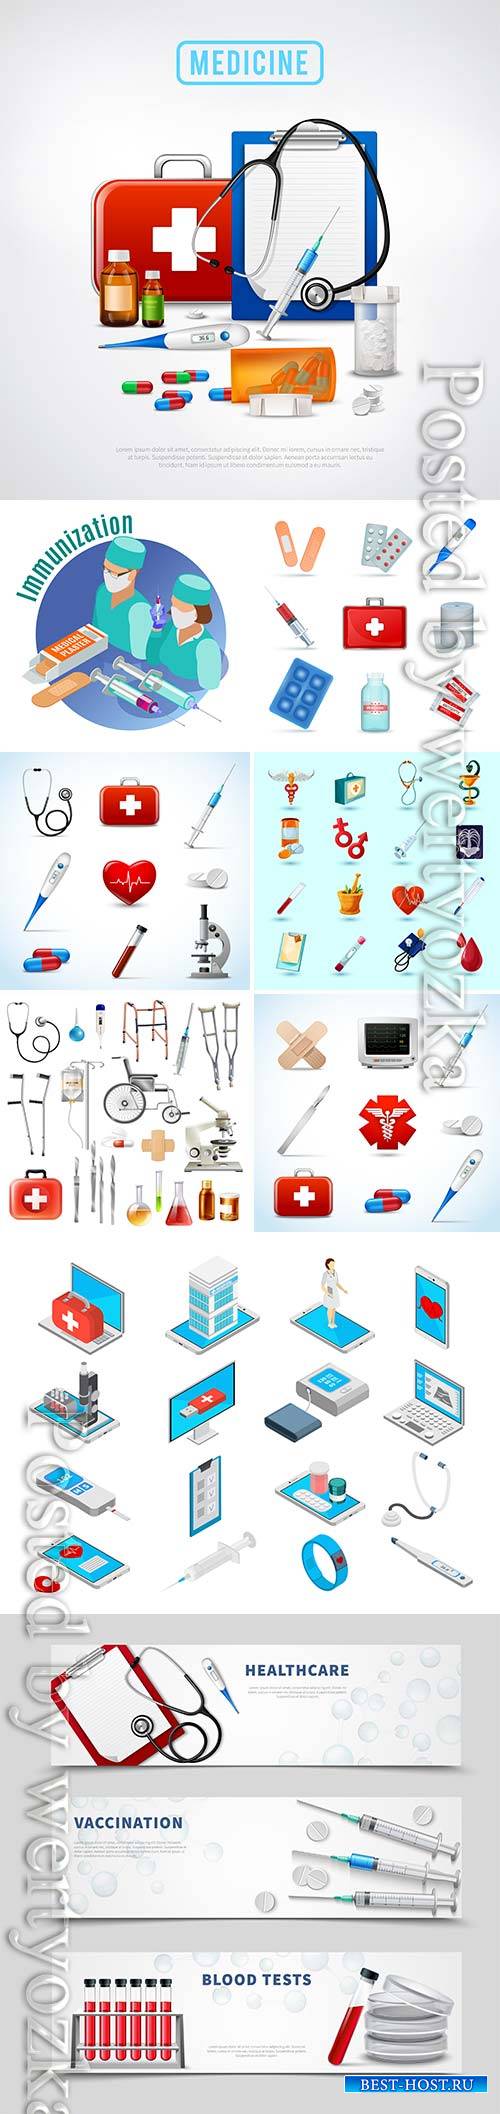 Medicine isometric concept with medical equipment symbols vector illustrati ...